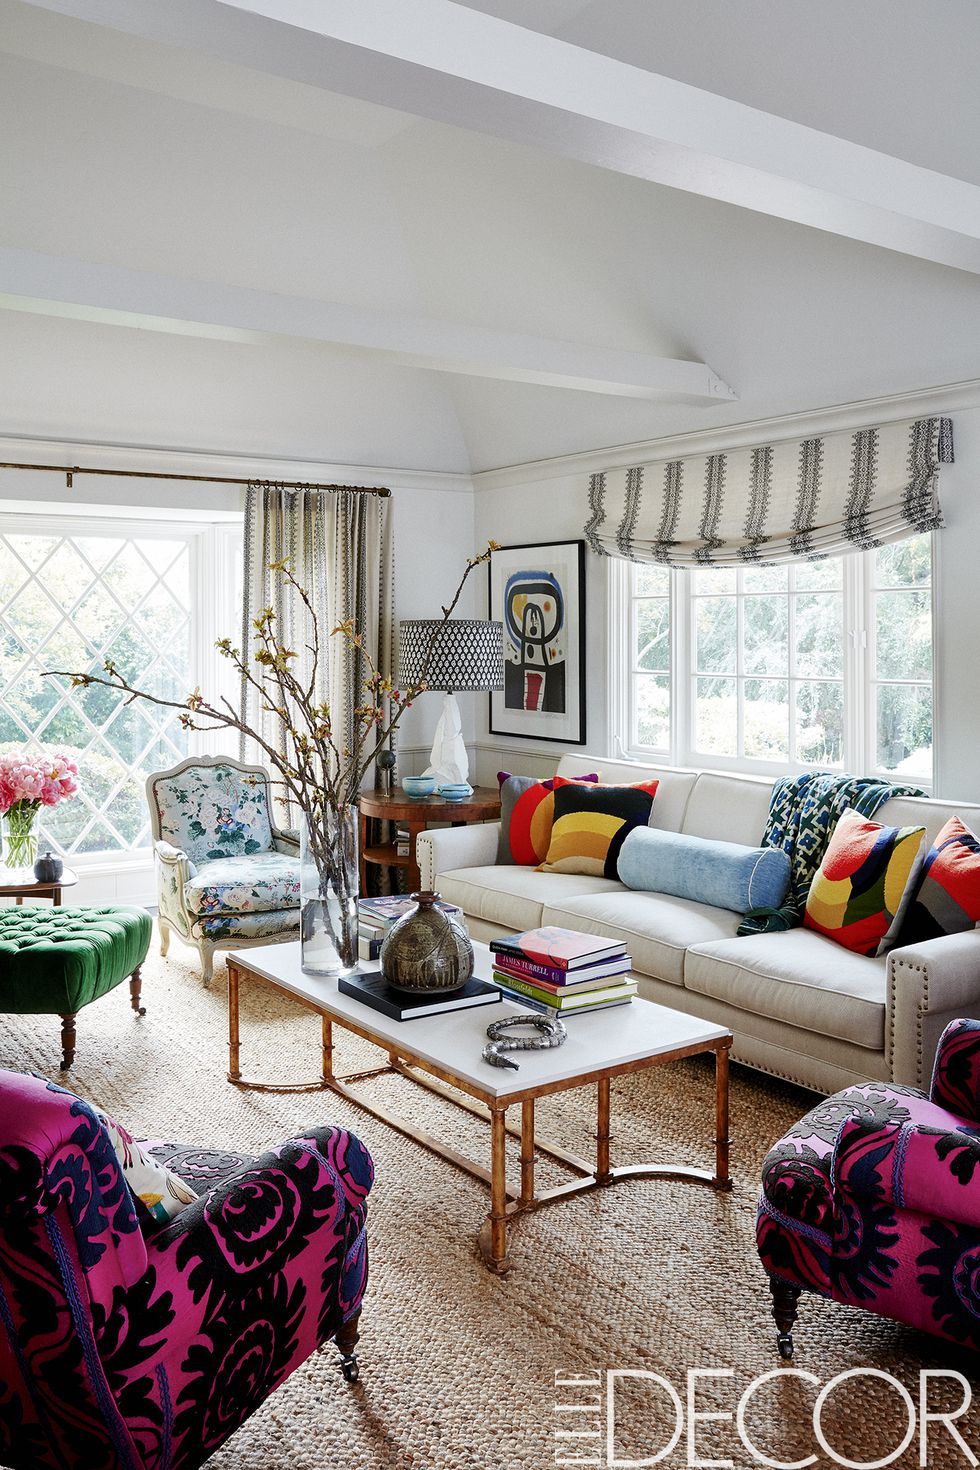 55 Best Living Room Curtain Ideas Elegant Window Treatments